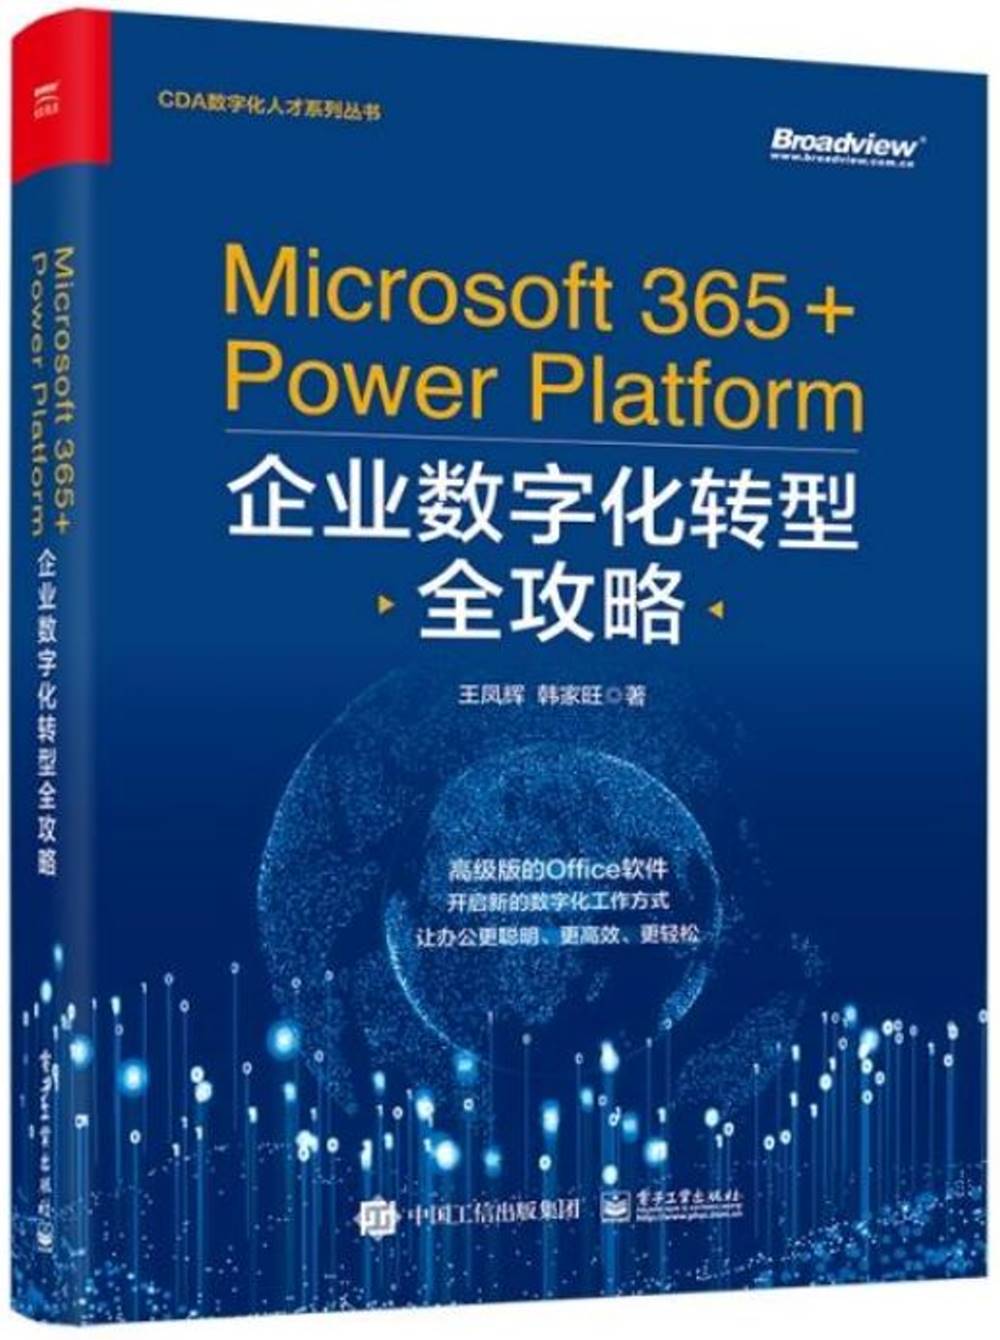 Microsoft 365+Power Platform企業數字化轉型全攻略